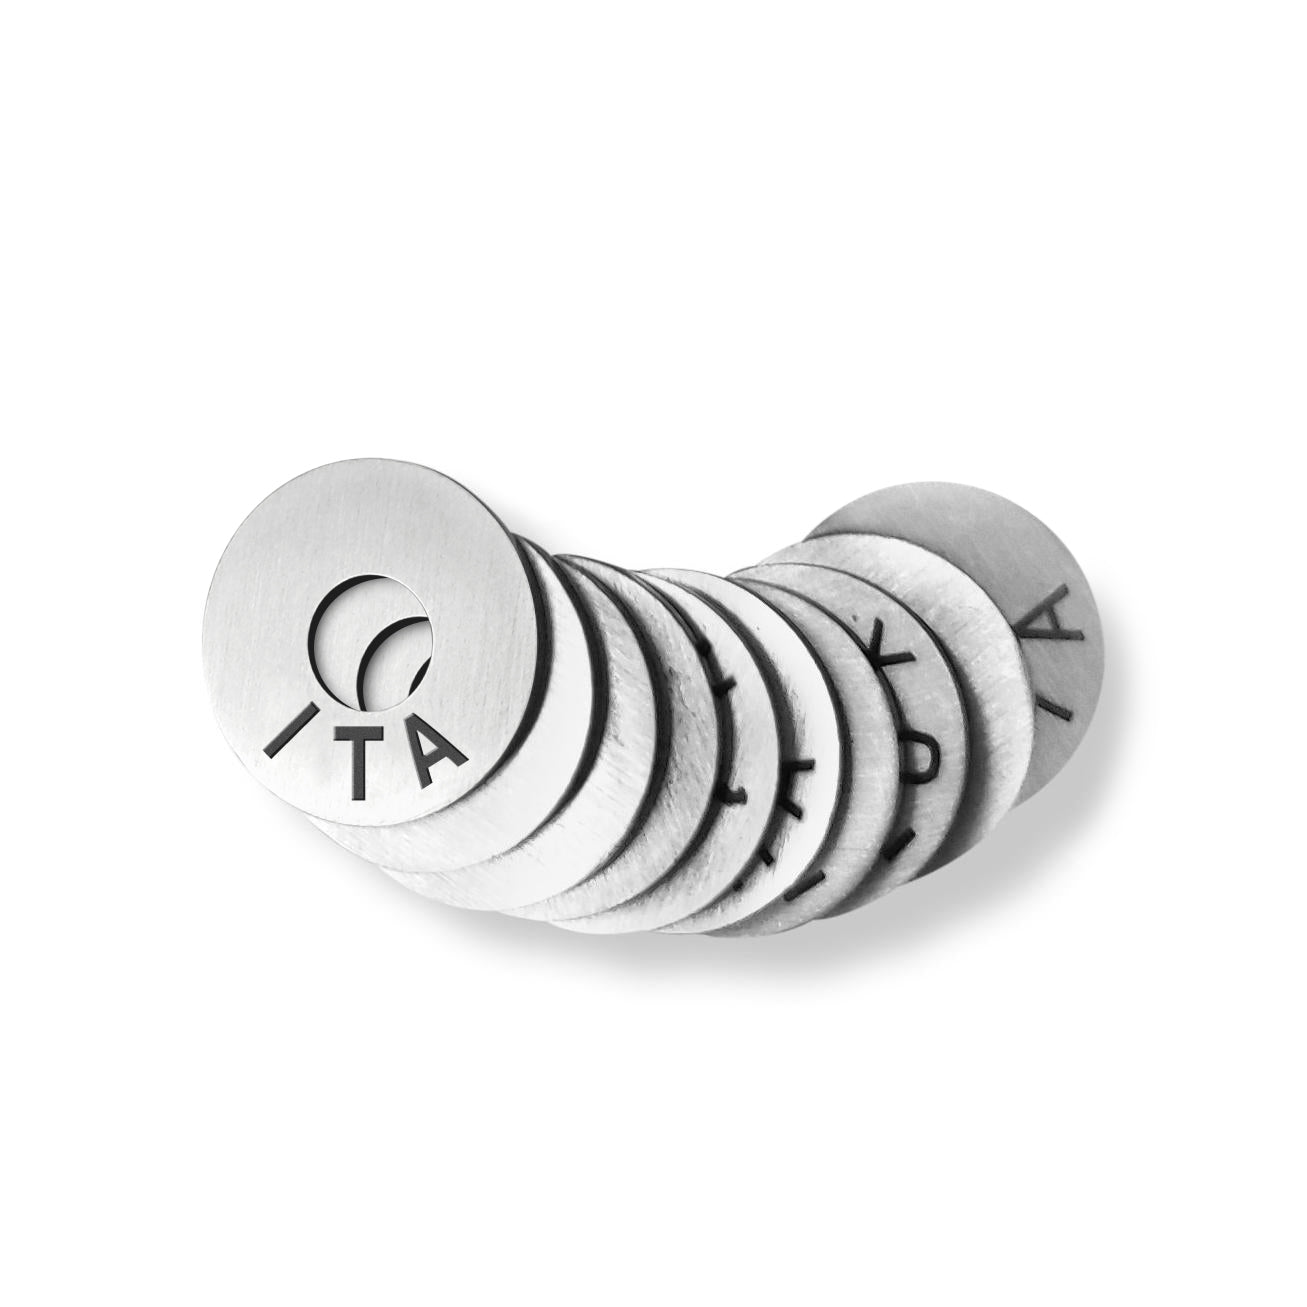 Argentiere Pagliai Three Bell Round Ring Keychain